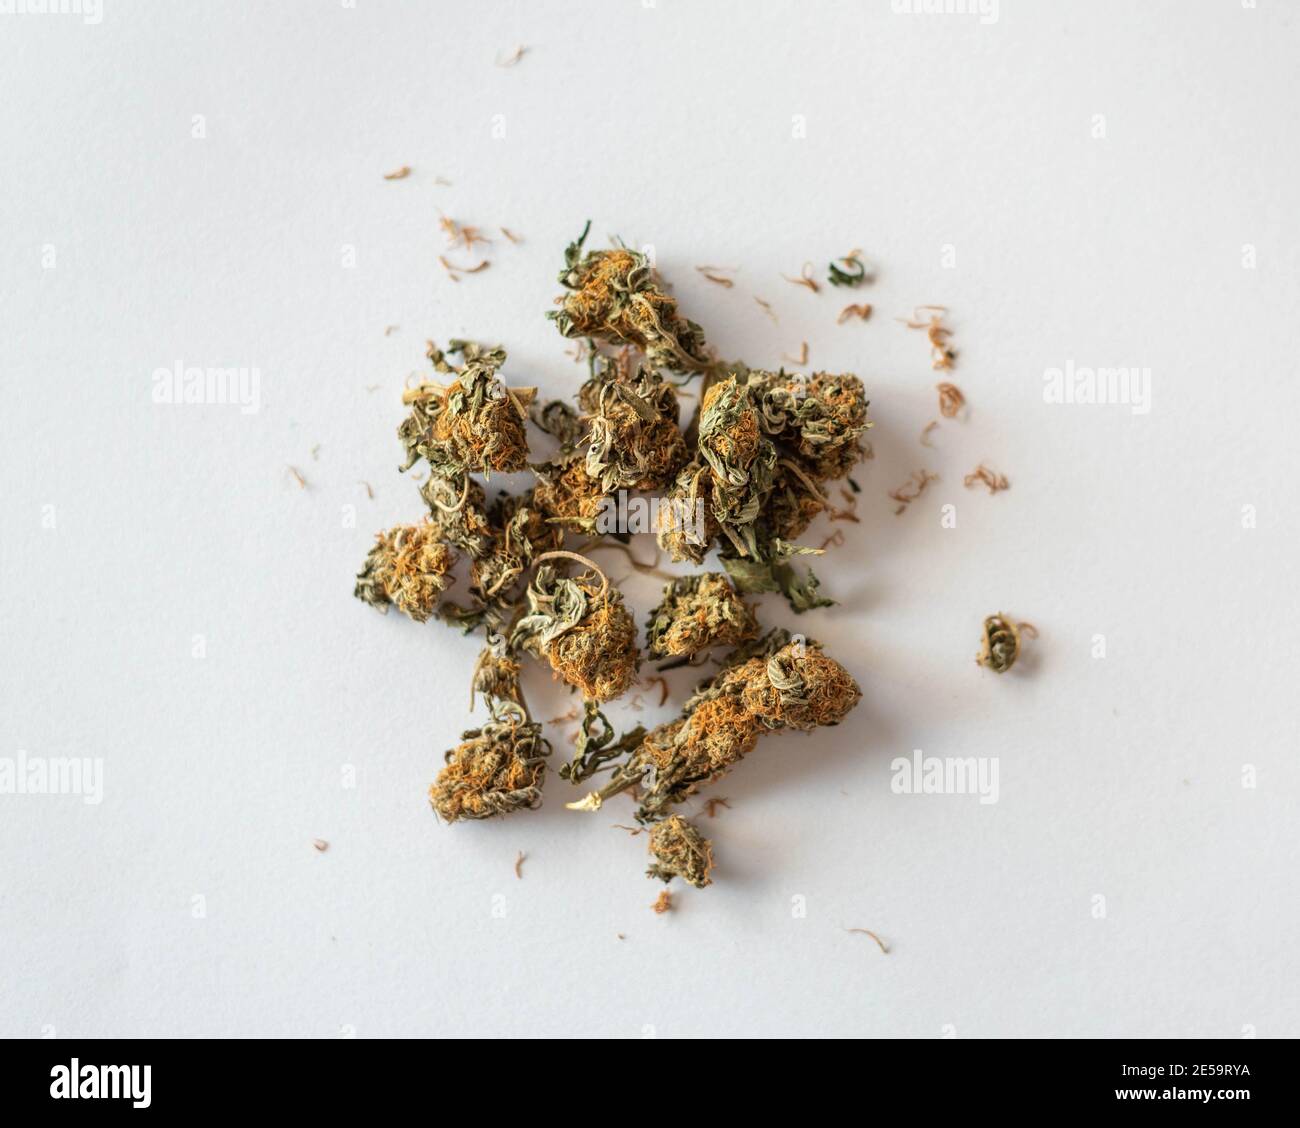 Flower bud cannabis, marijuana, weed, drug for medical use Stock Photo